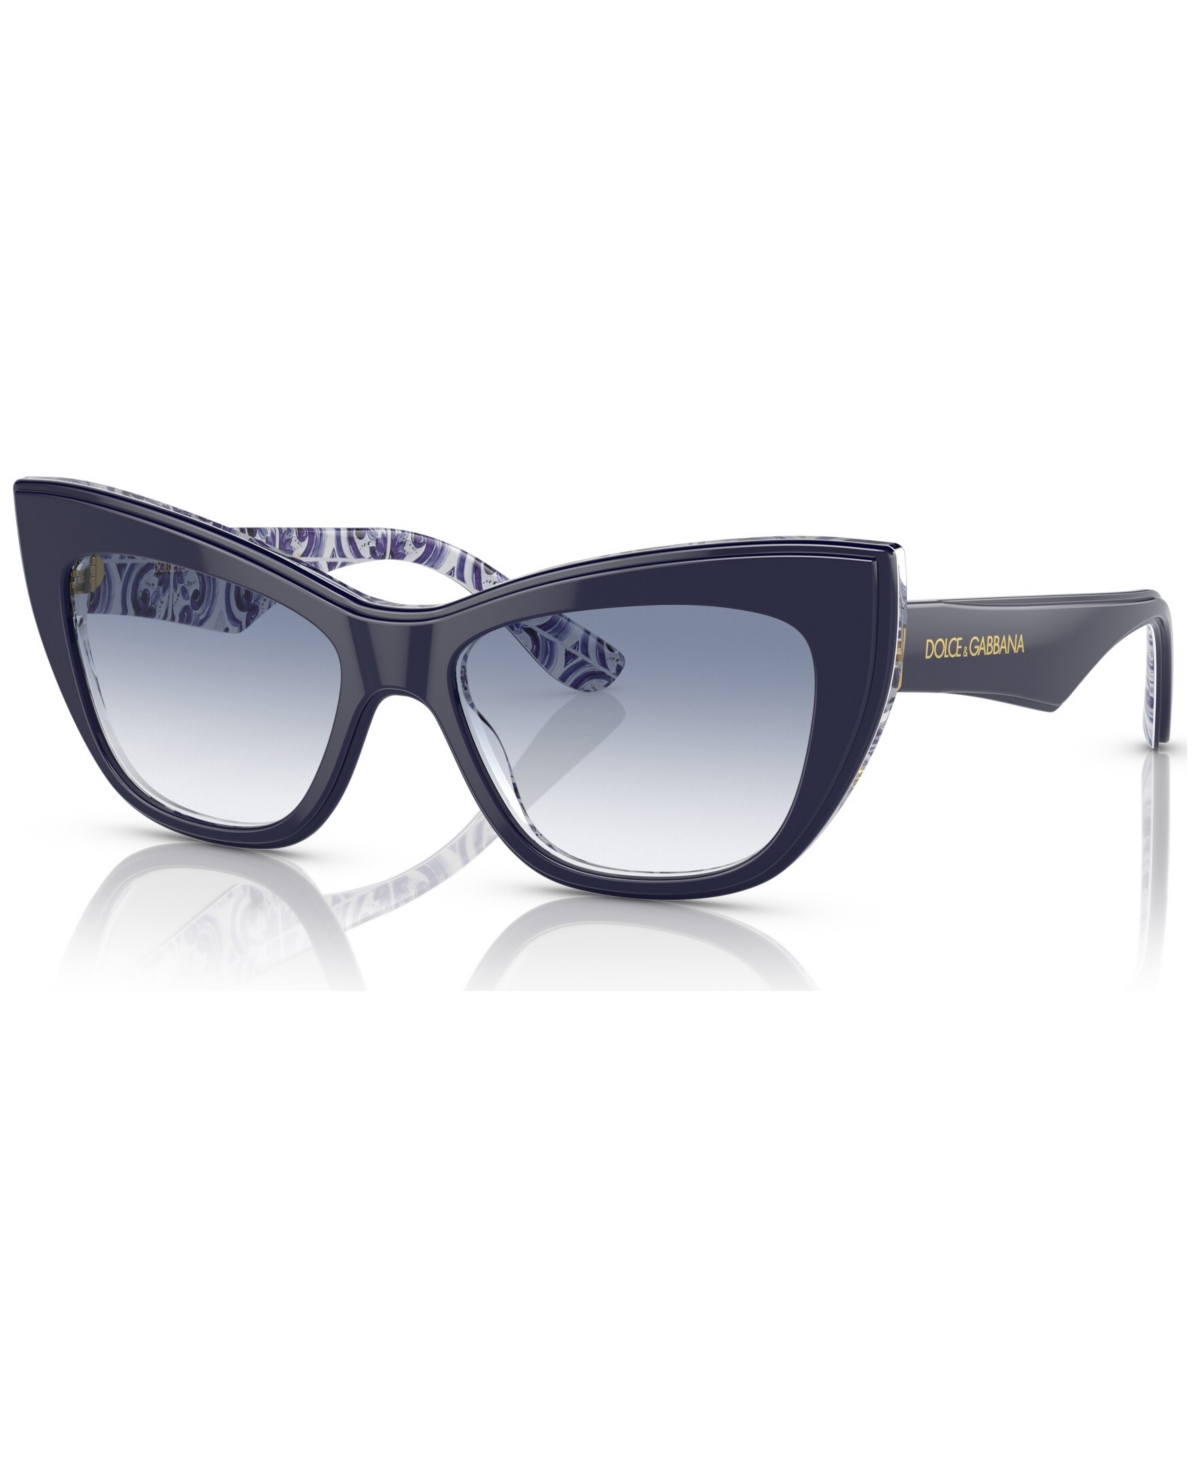 Dolce&Gabbana Women's Sunglasses, DG441754-y - Blue on Blue Maiolica